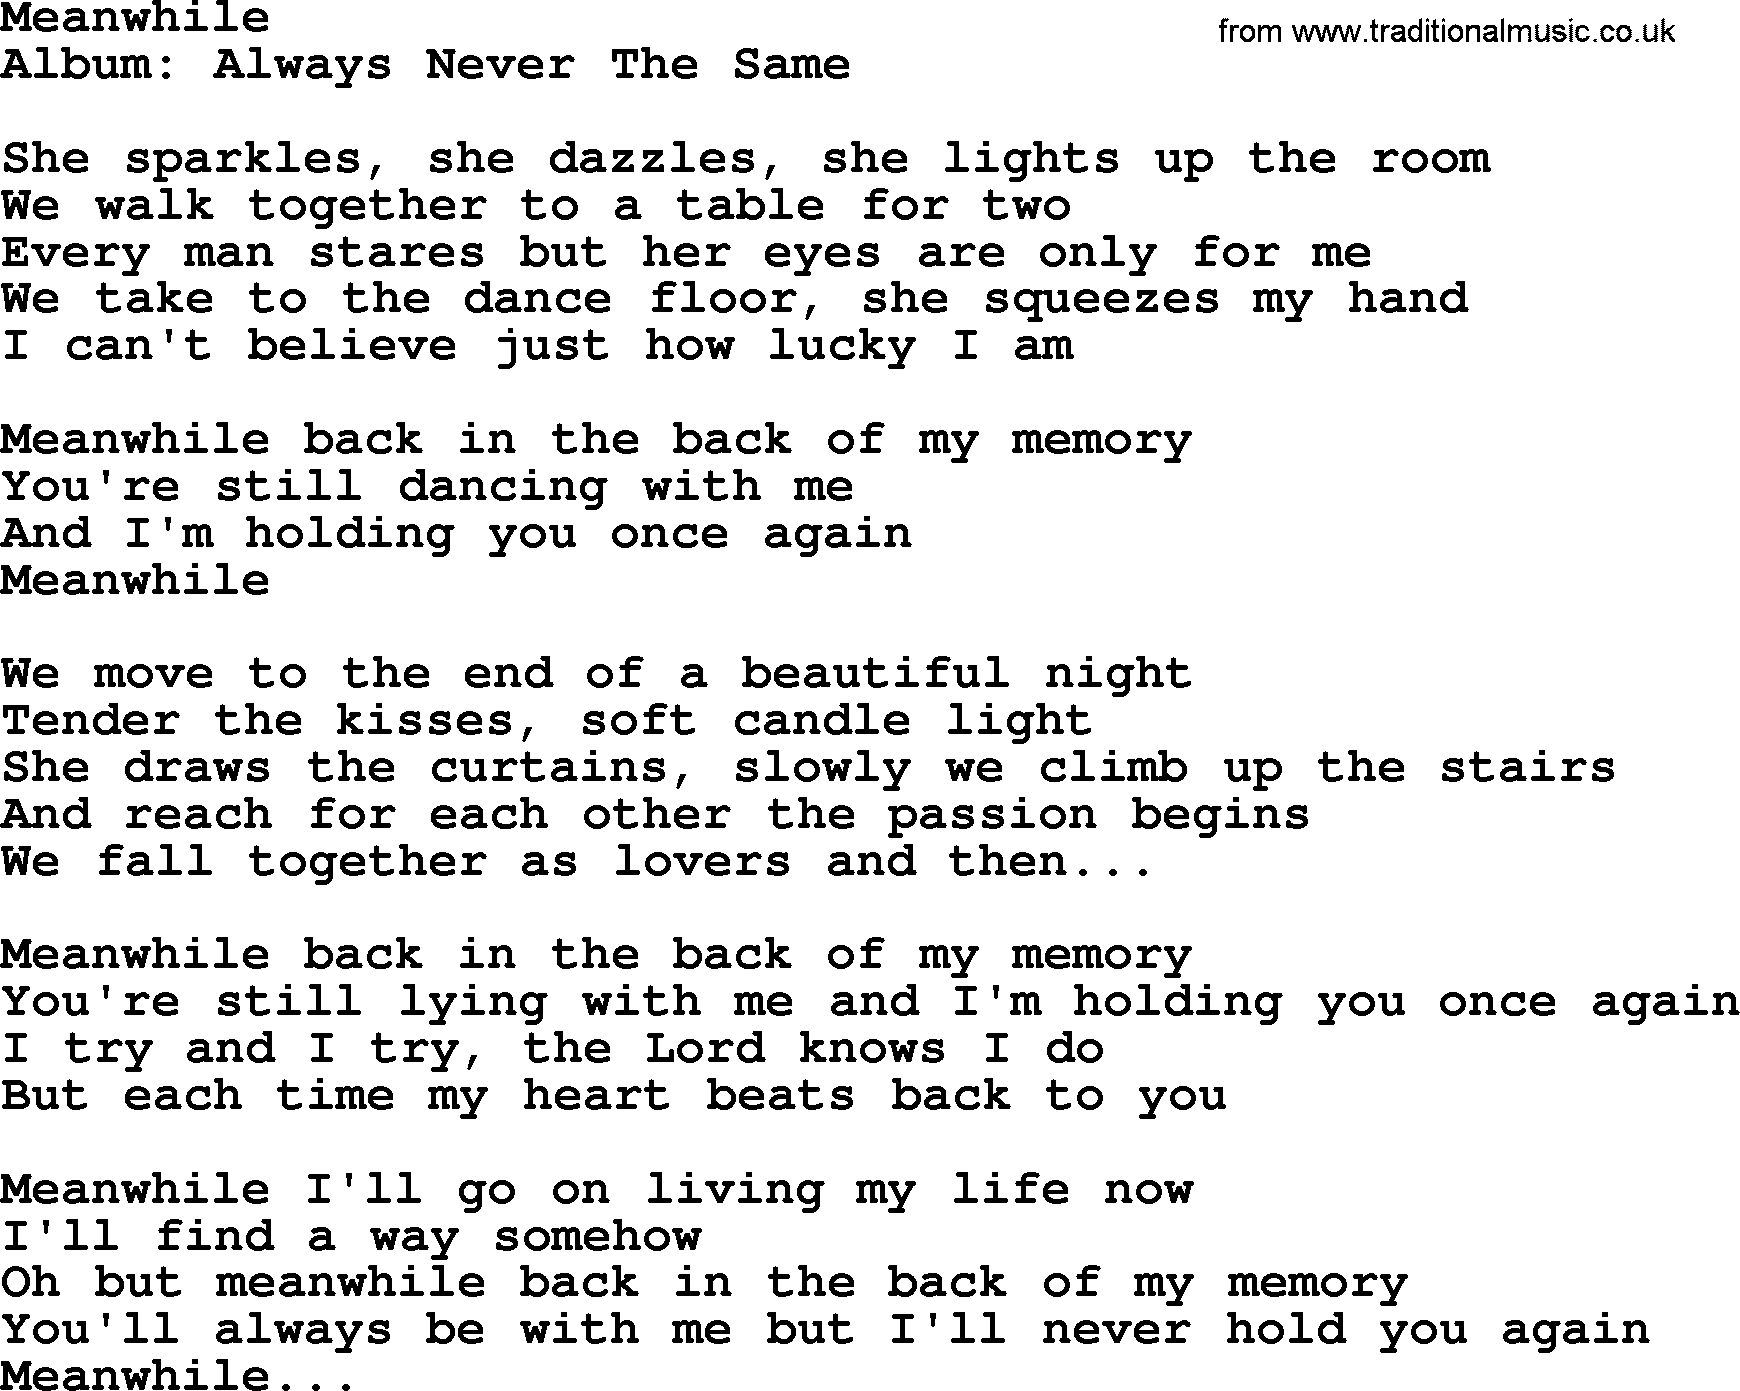 George Strait song: Meanwhile, lyrics